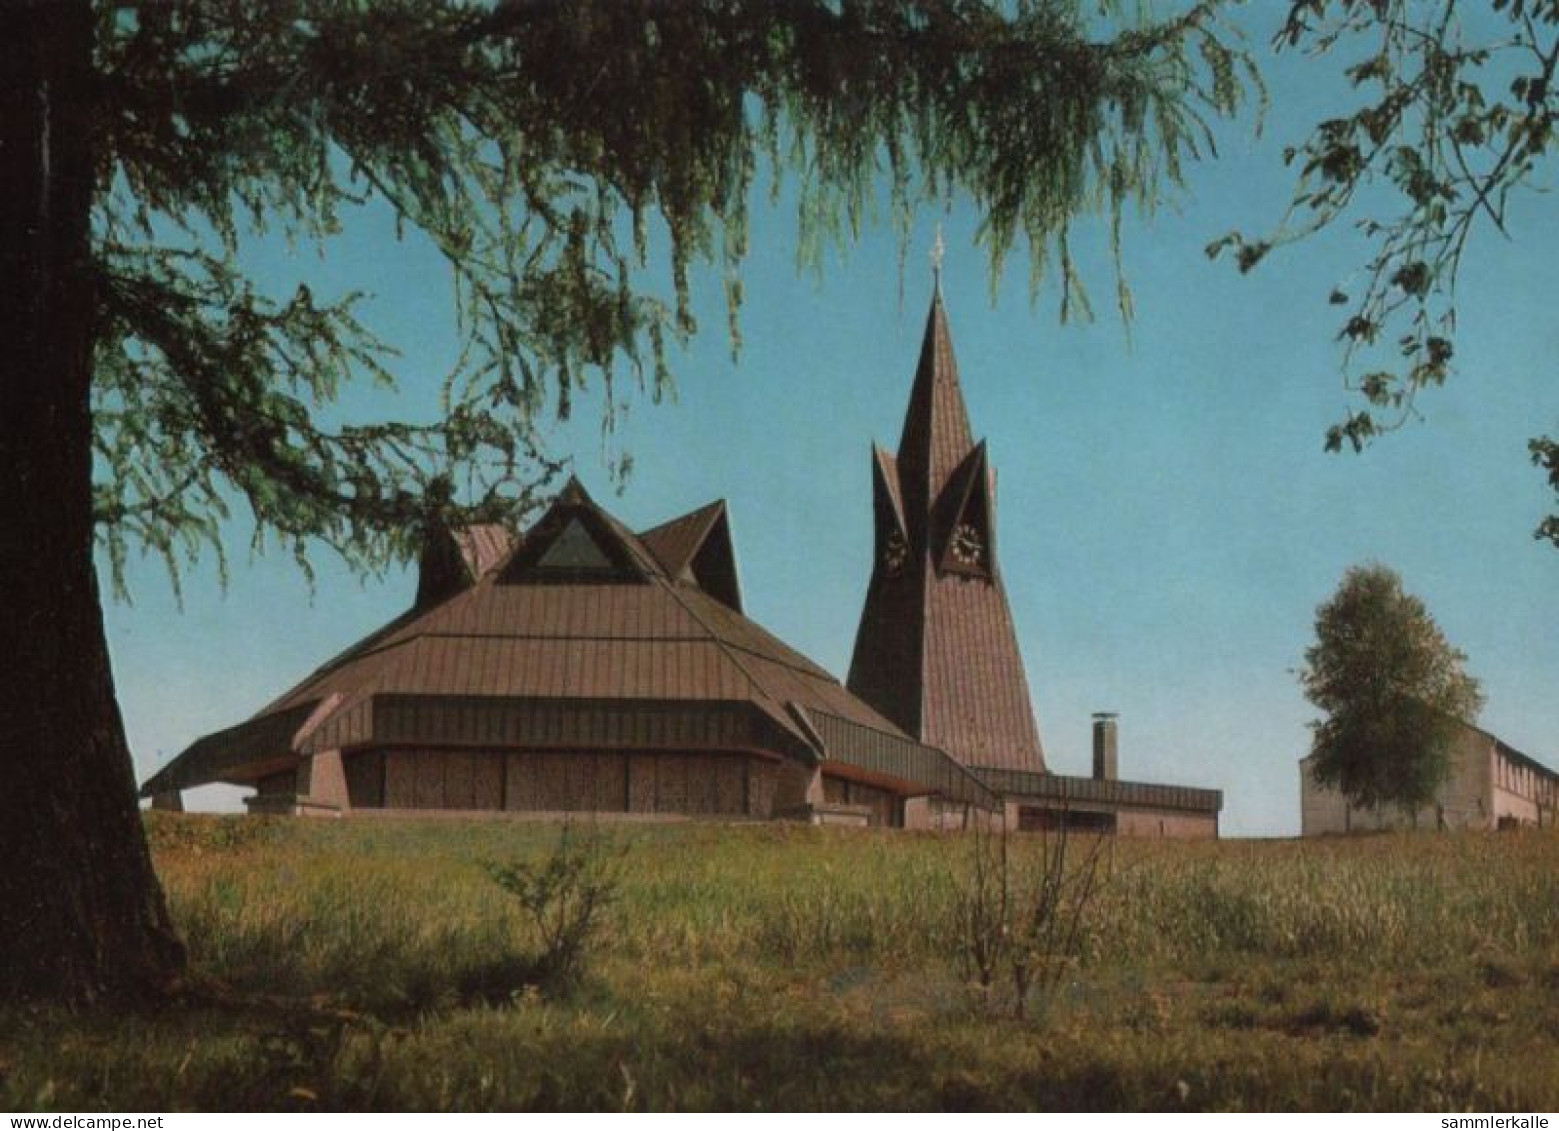 97030 - Buchbach - Kath. Pfarrkirche - Ca. 1975 - Muehldorf